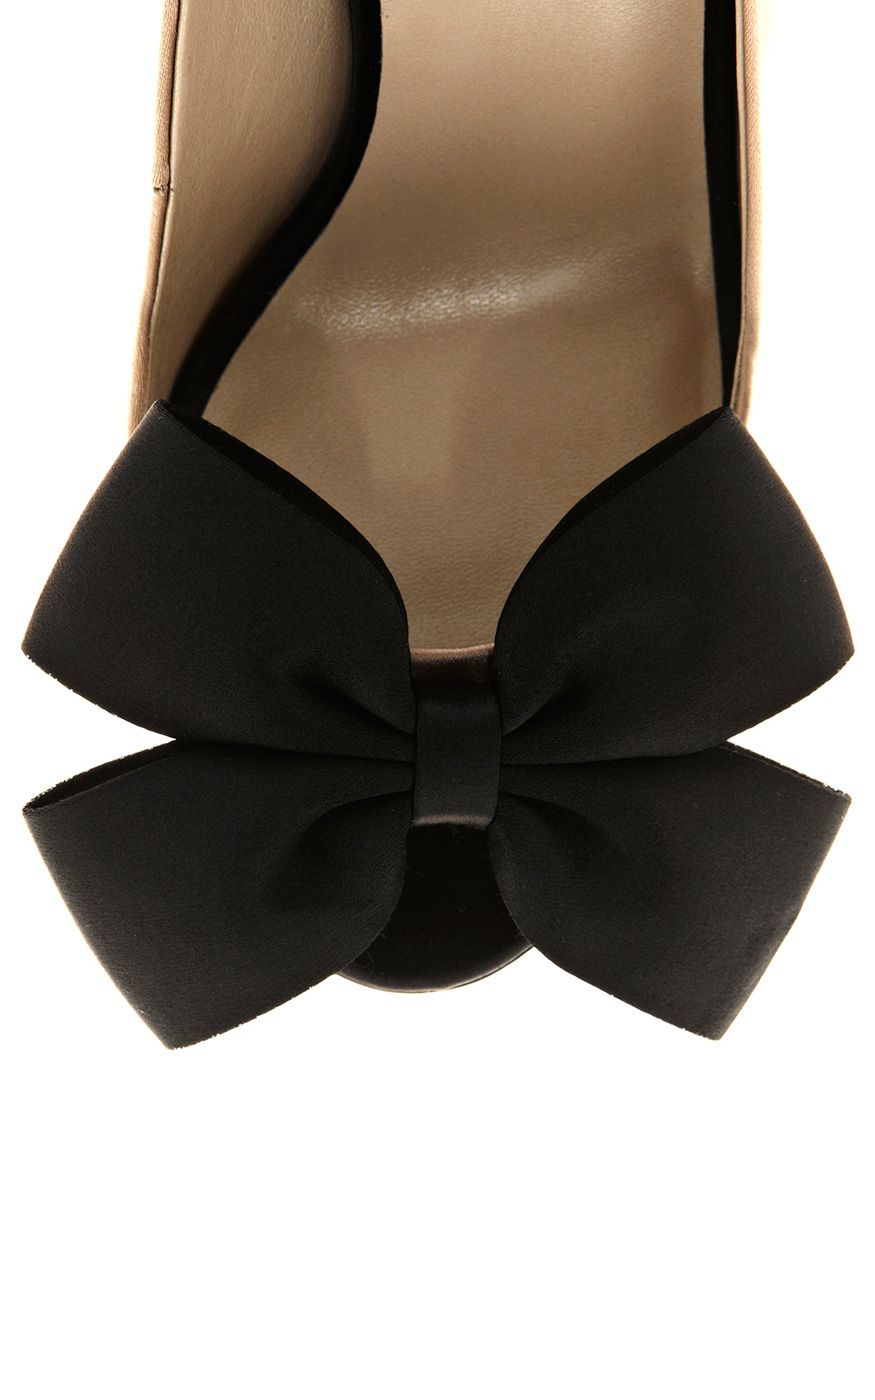 Karen millen Bow Collection Peep Toe Shoes in Black | Lyst